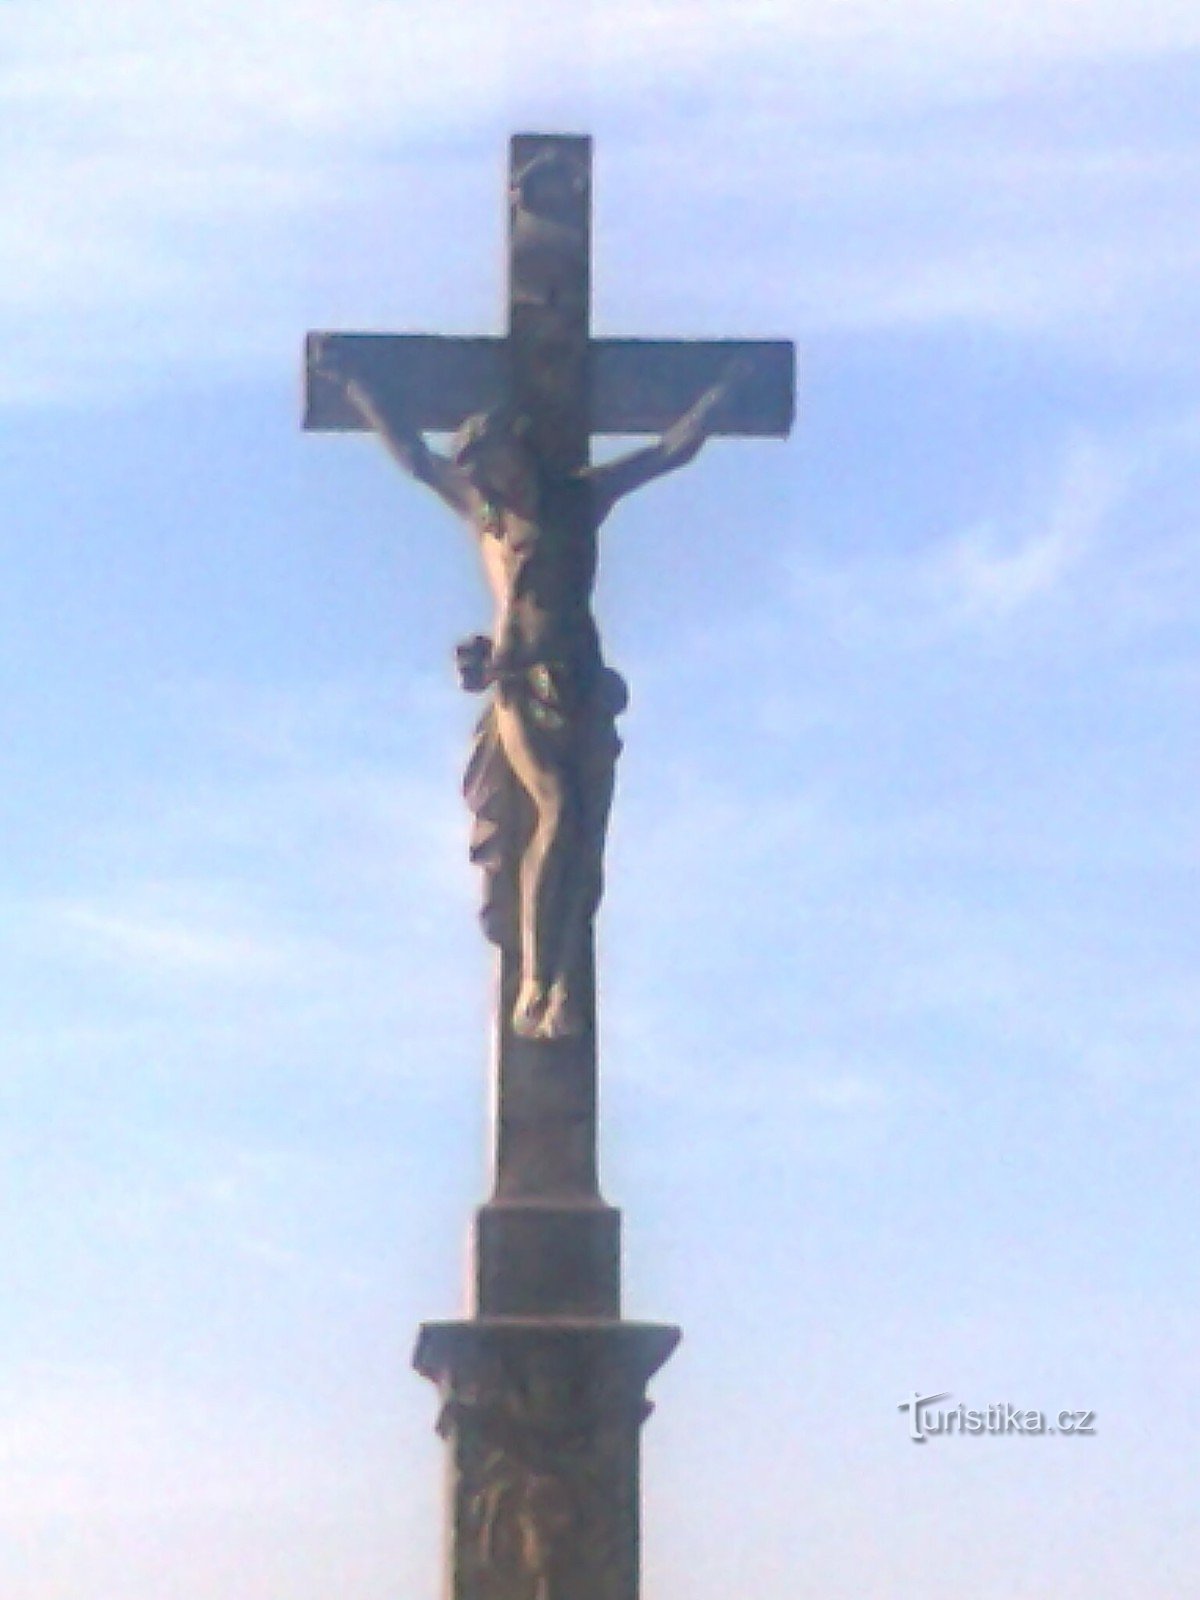 detalhe da cruz